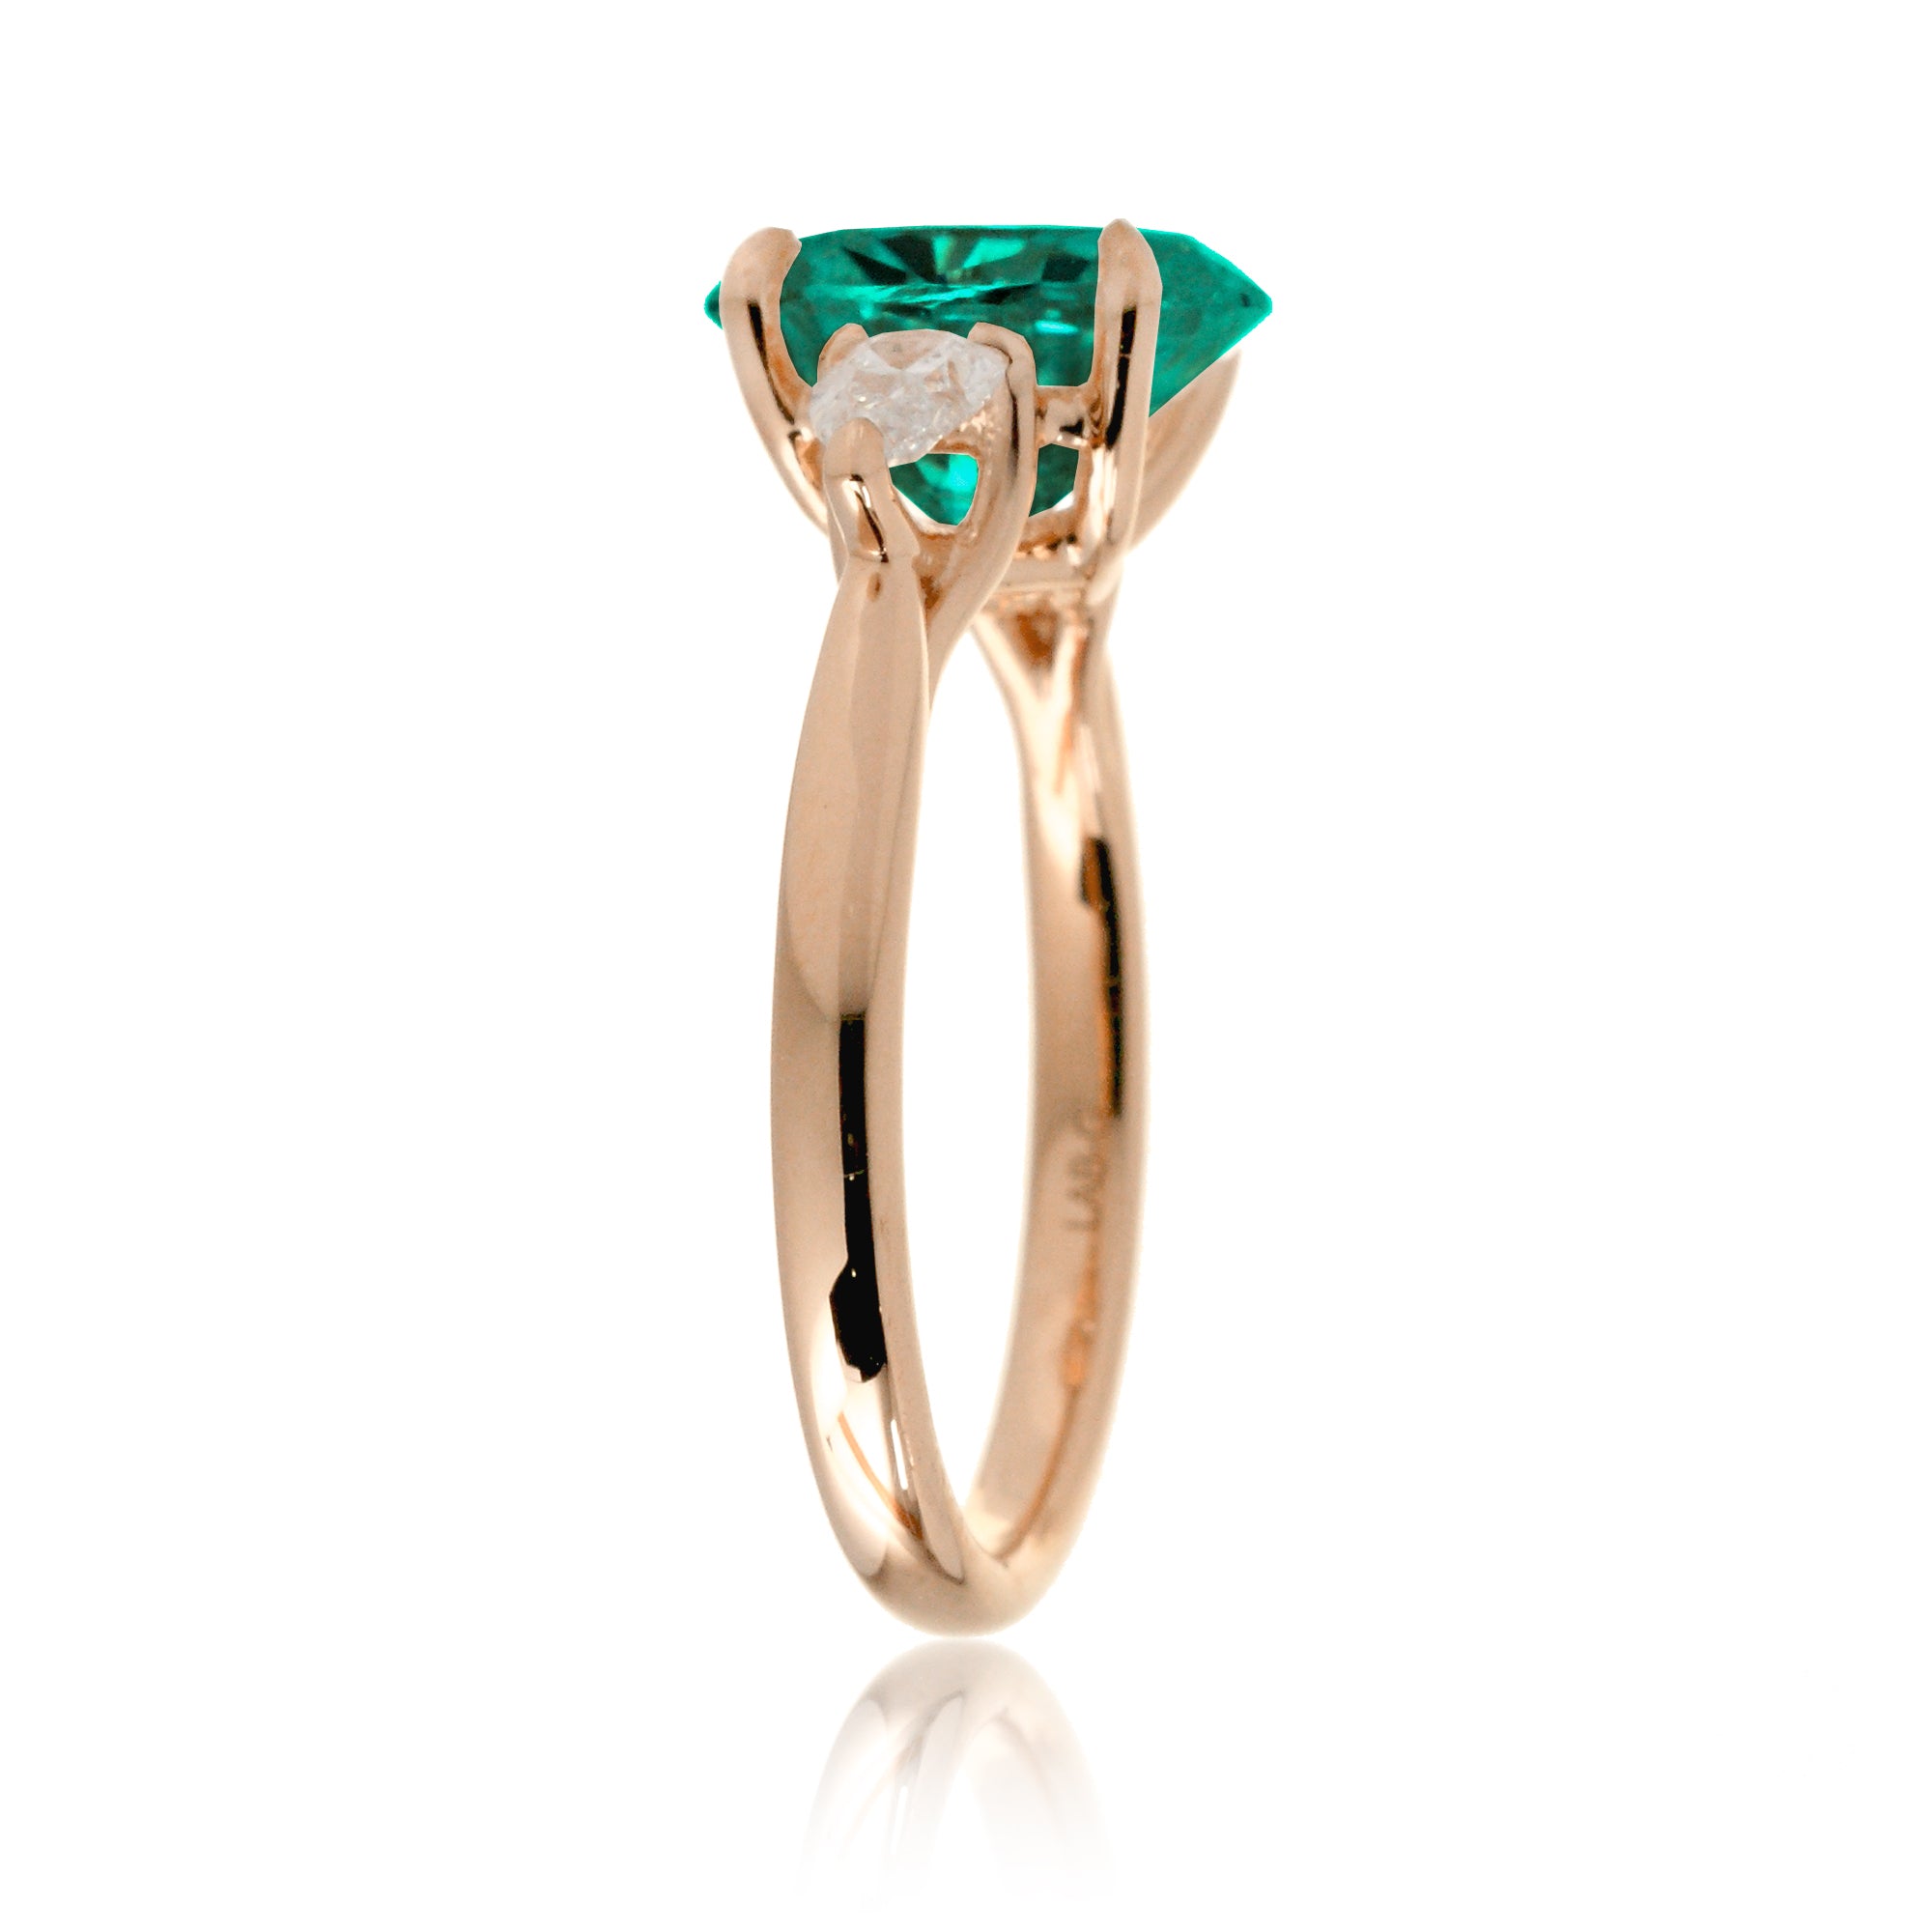 Oval cut green emerald three stone pear diamond ring rose gold